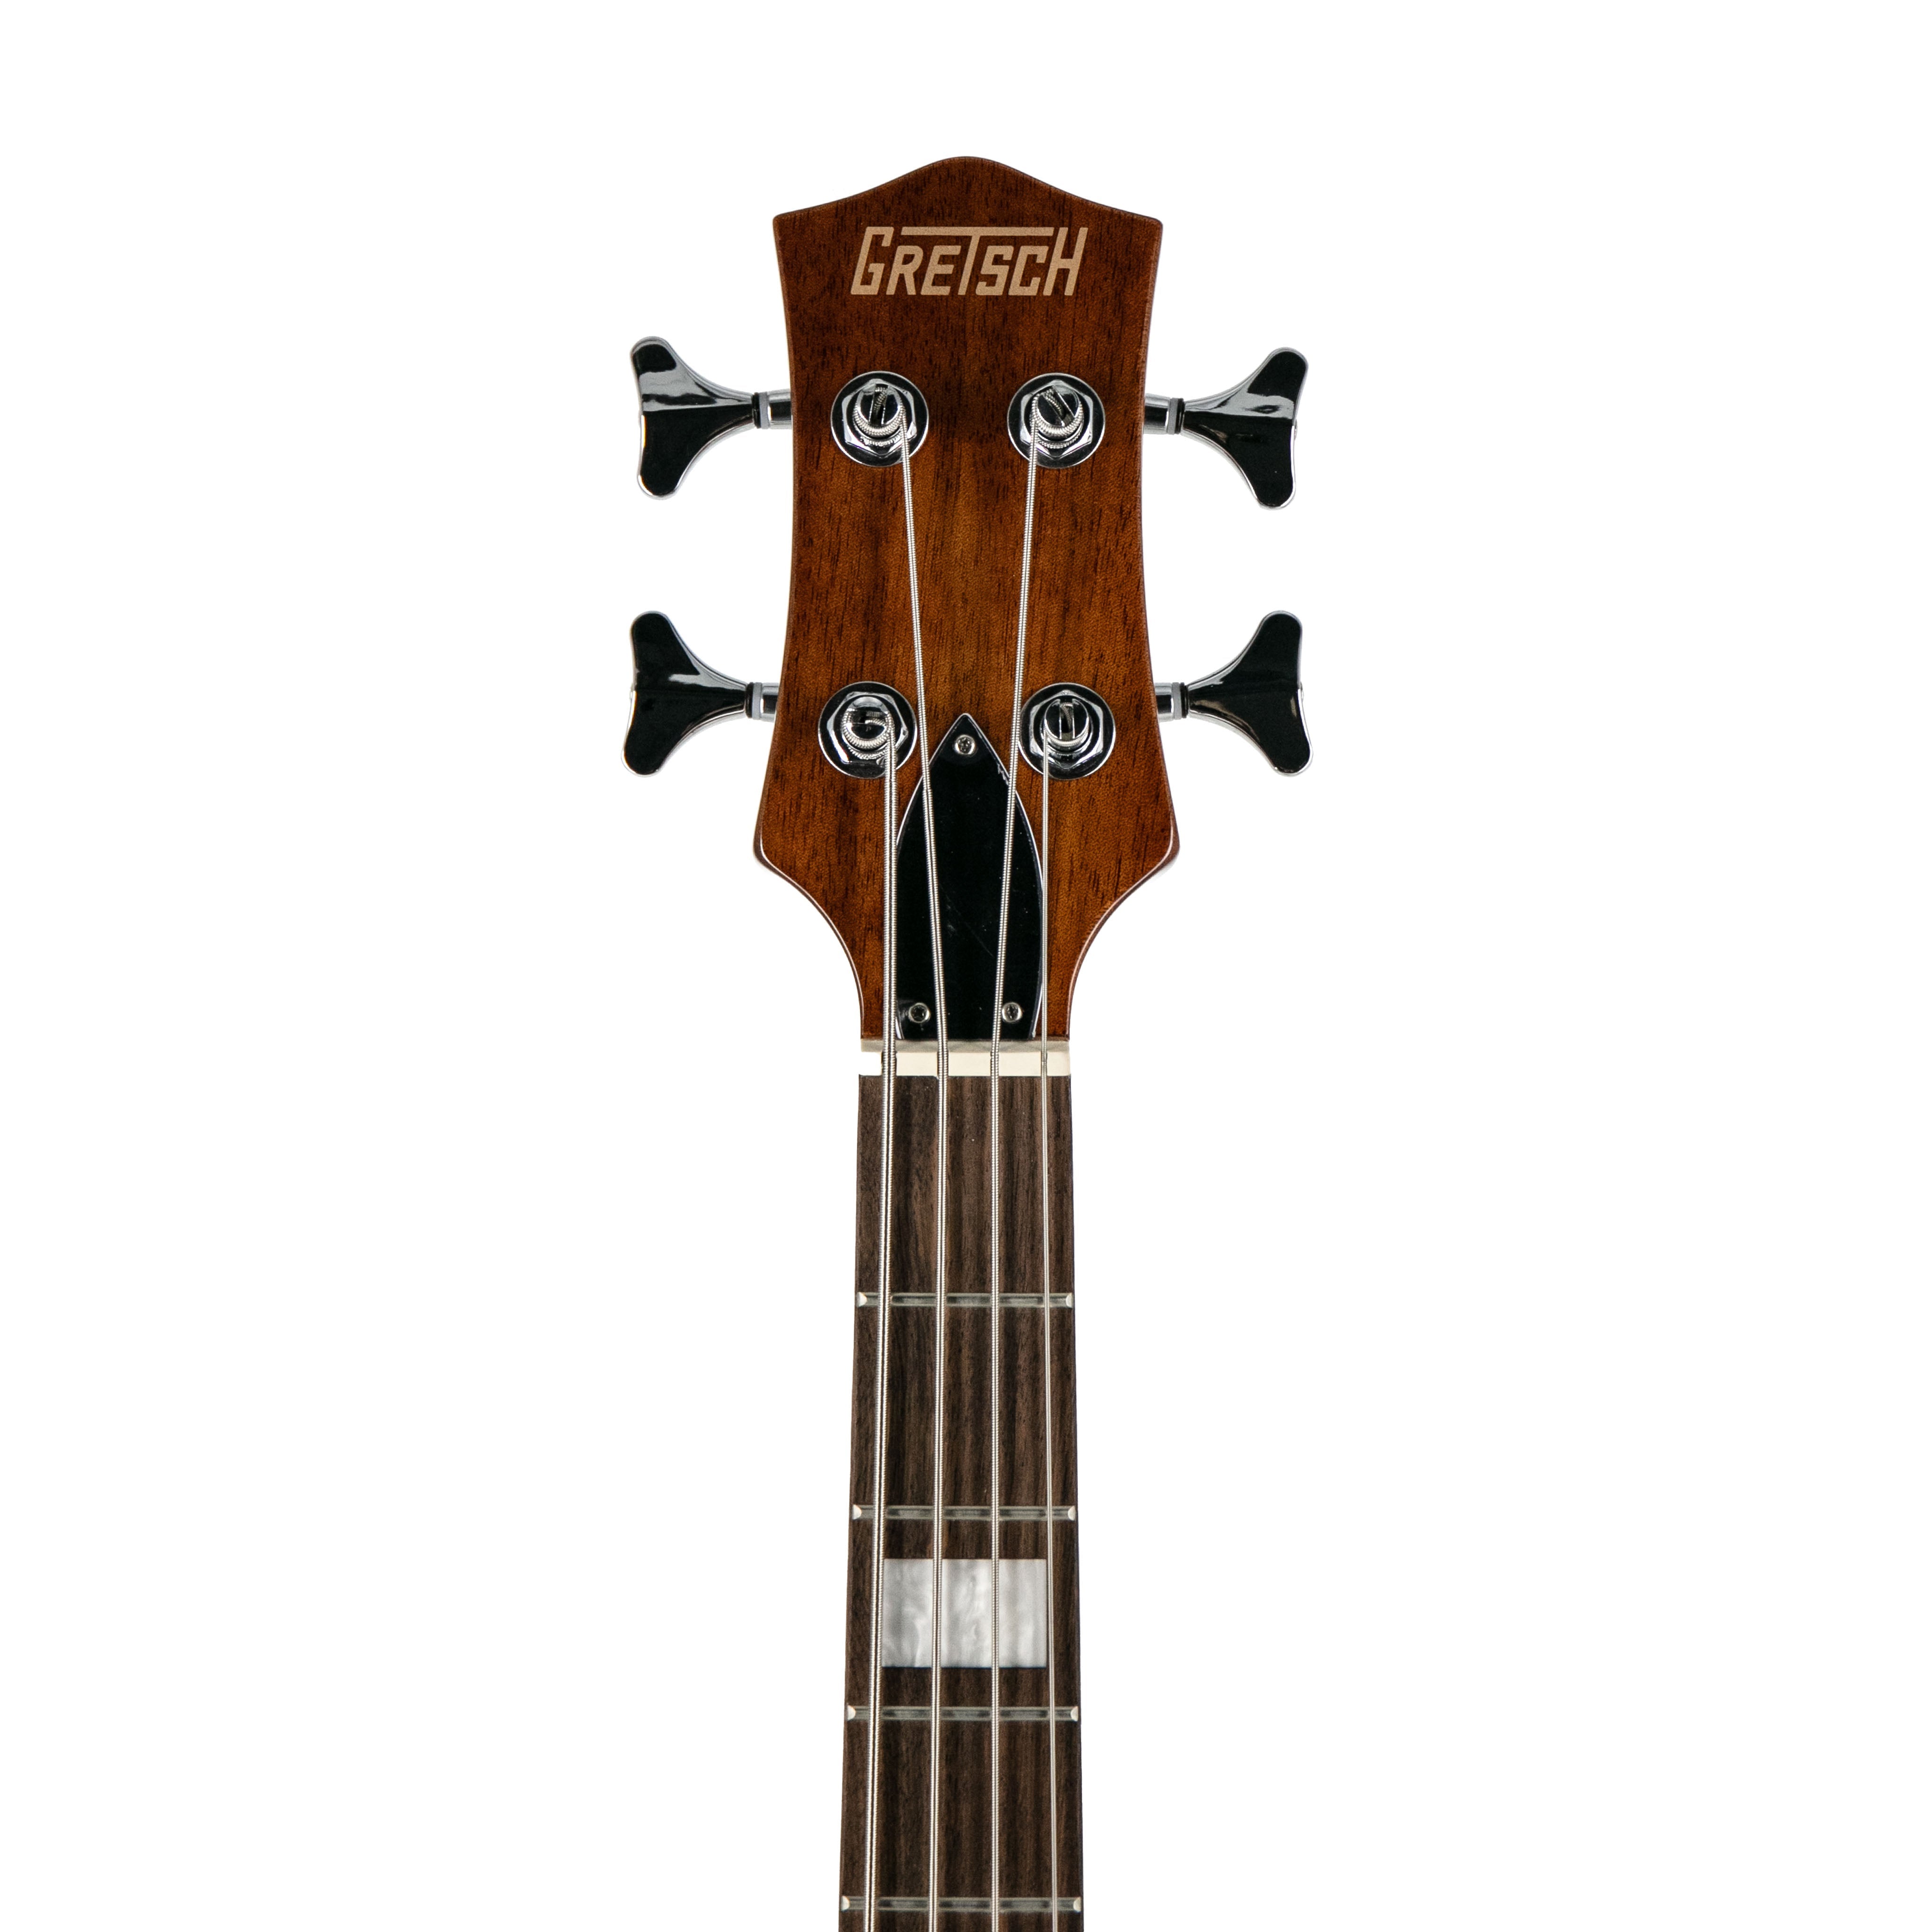 Gretsch FSR G2229B Electromatic Junior Jet Bass II Guitar, Vintage White